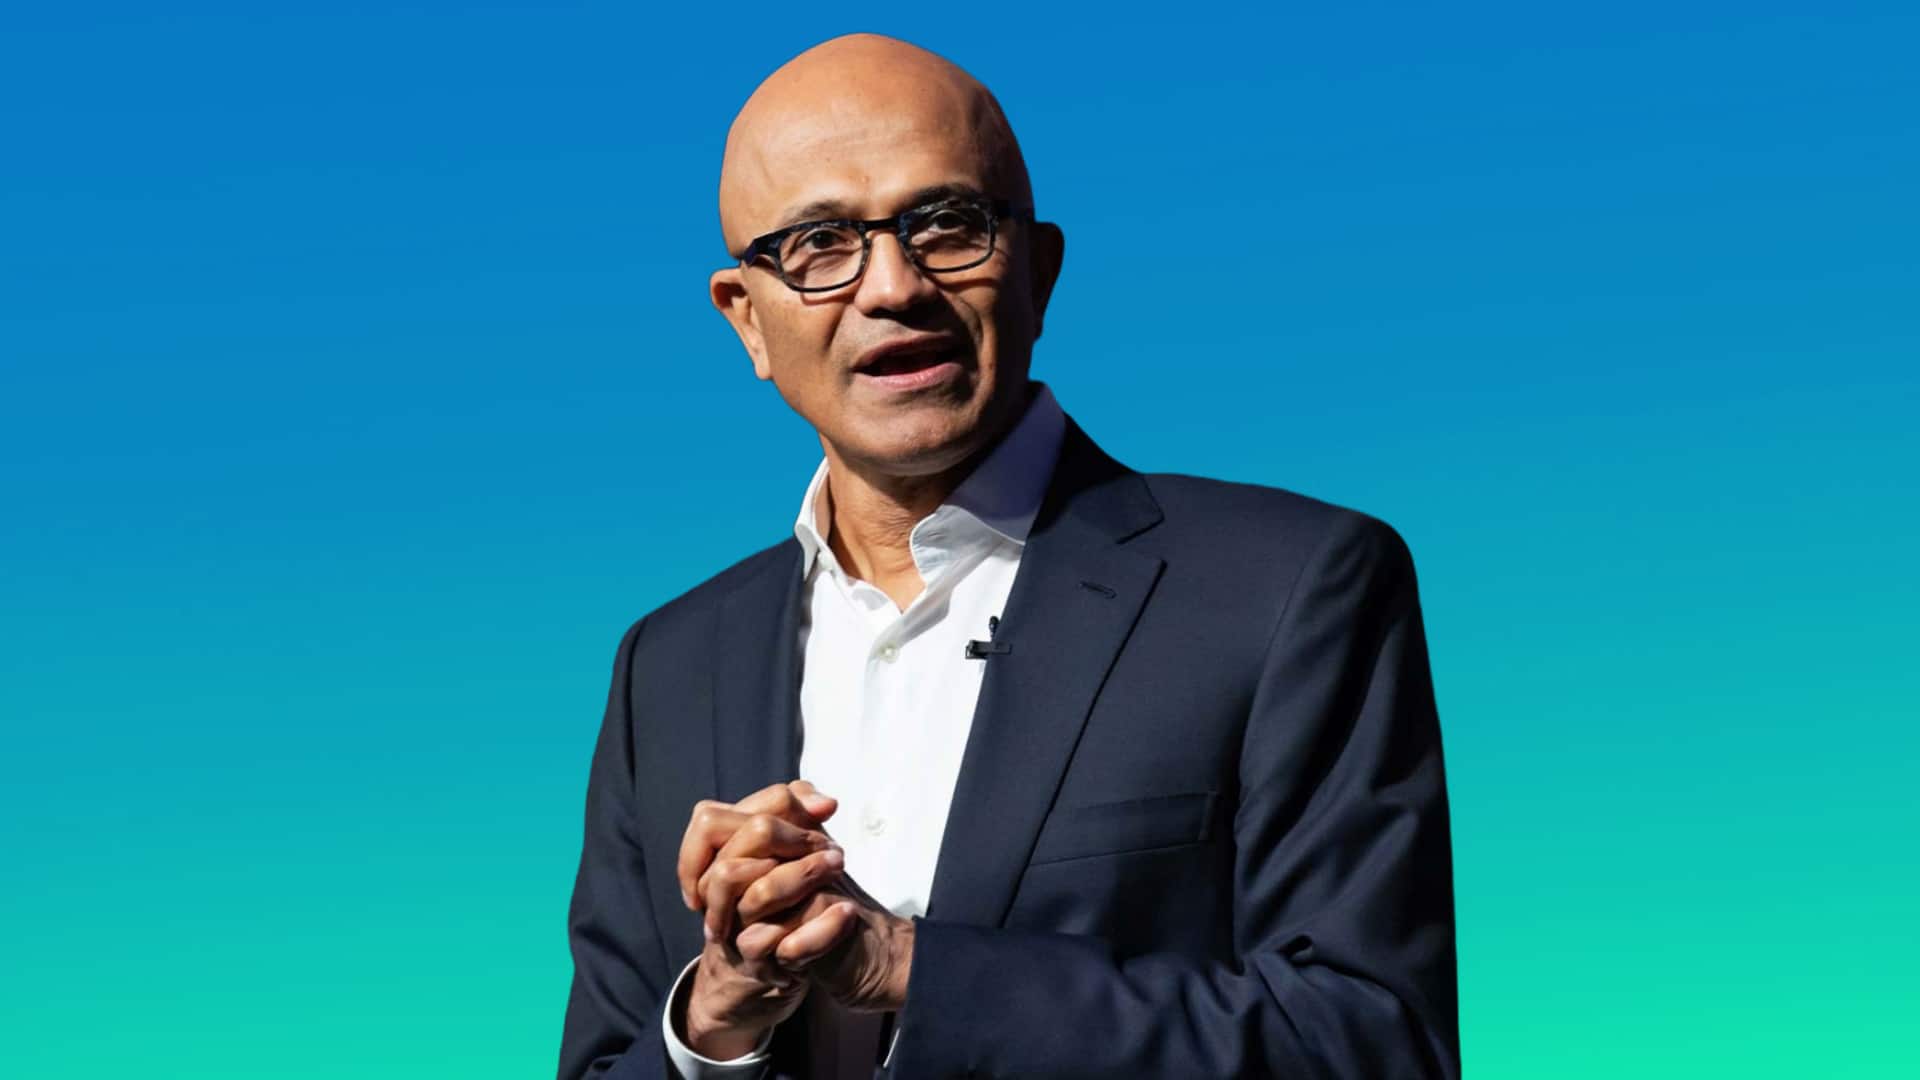 माइक्रोसॉफ्ट CEO सत्य नडेला अगले महीने आएंगे भारत, स्टार्टअप्स से कर सकते हैं मुलाकात